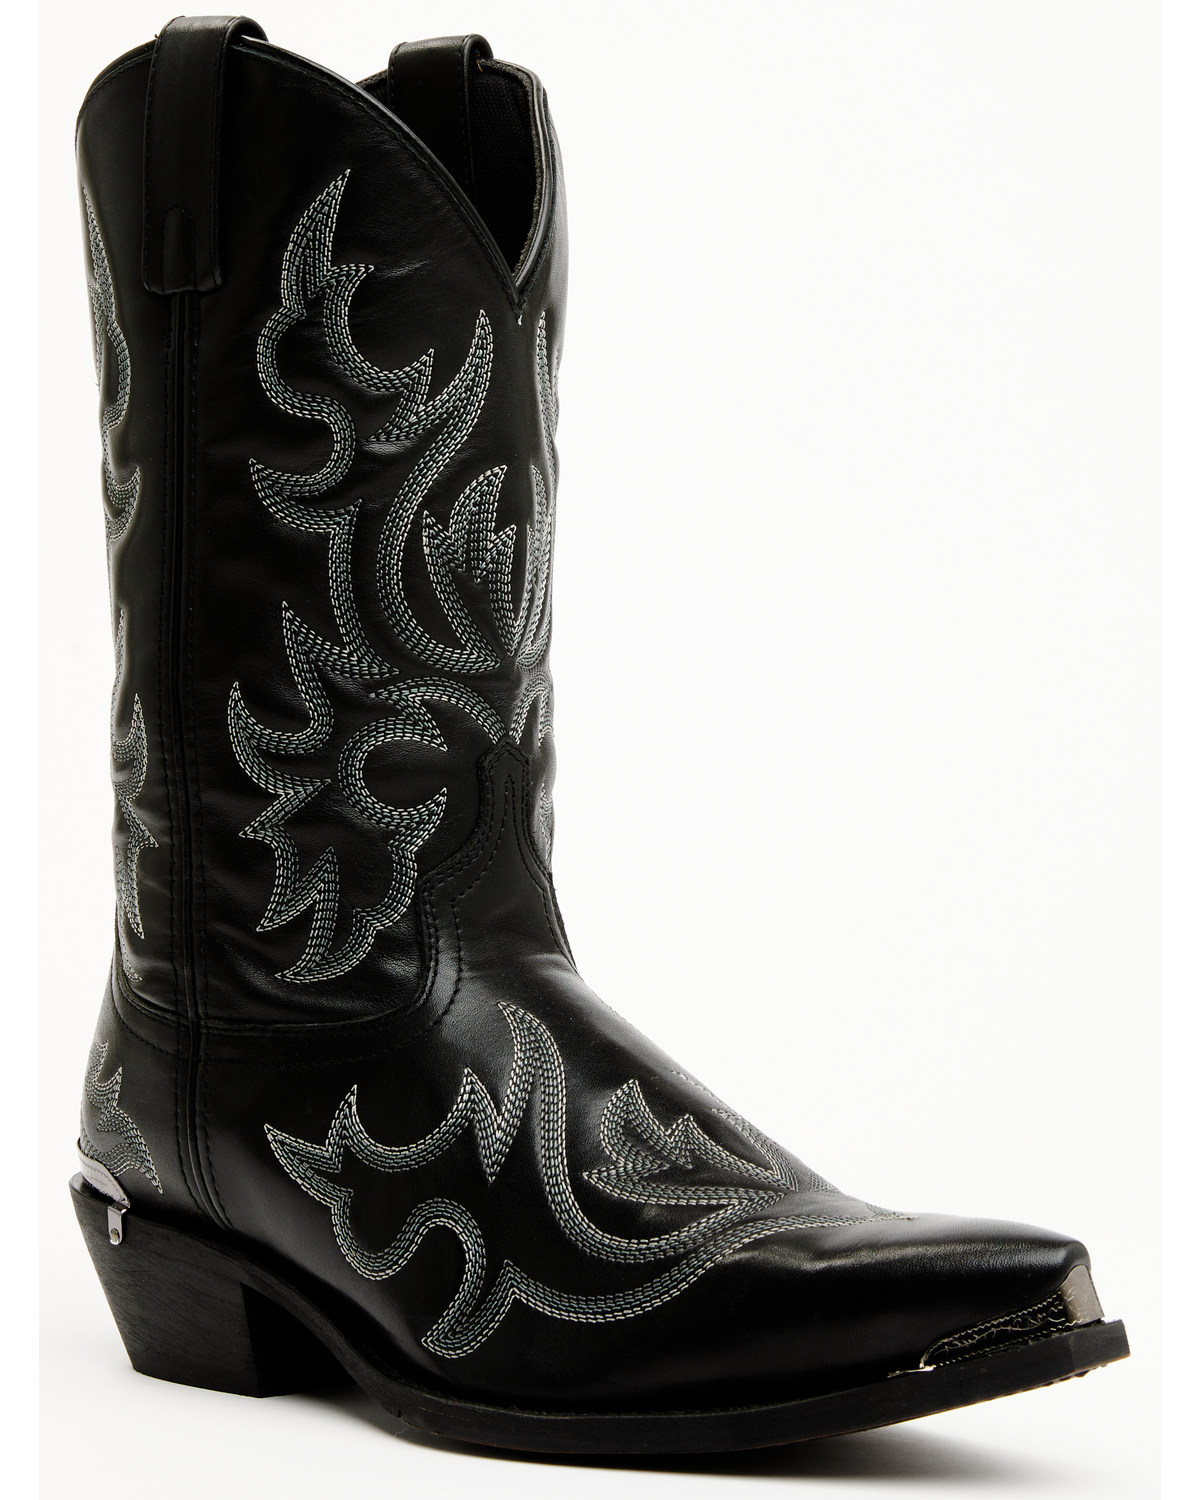 Laredo Men's Jameson Western Boots - Snip Toe